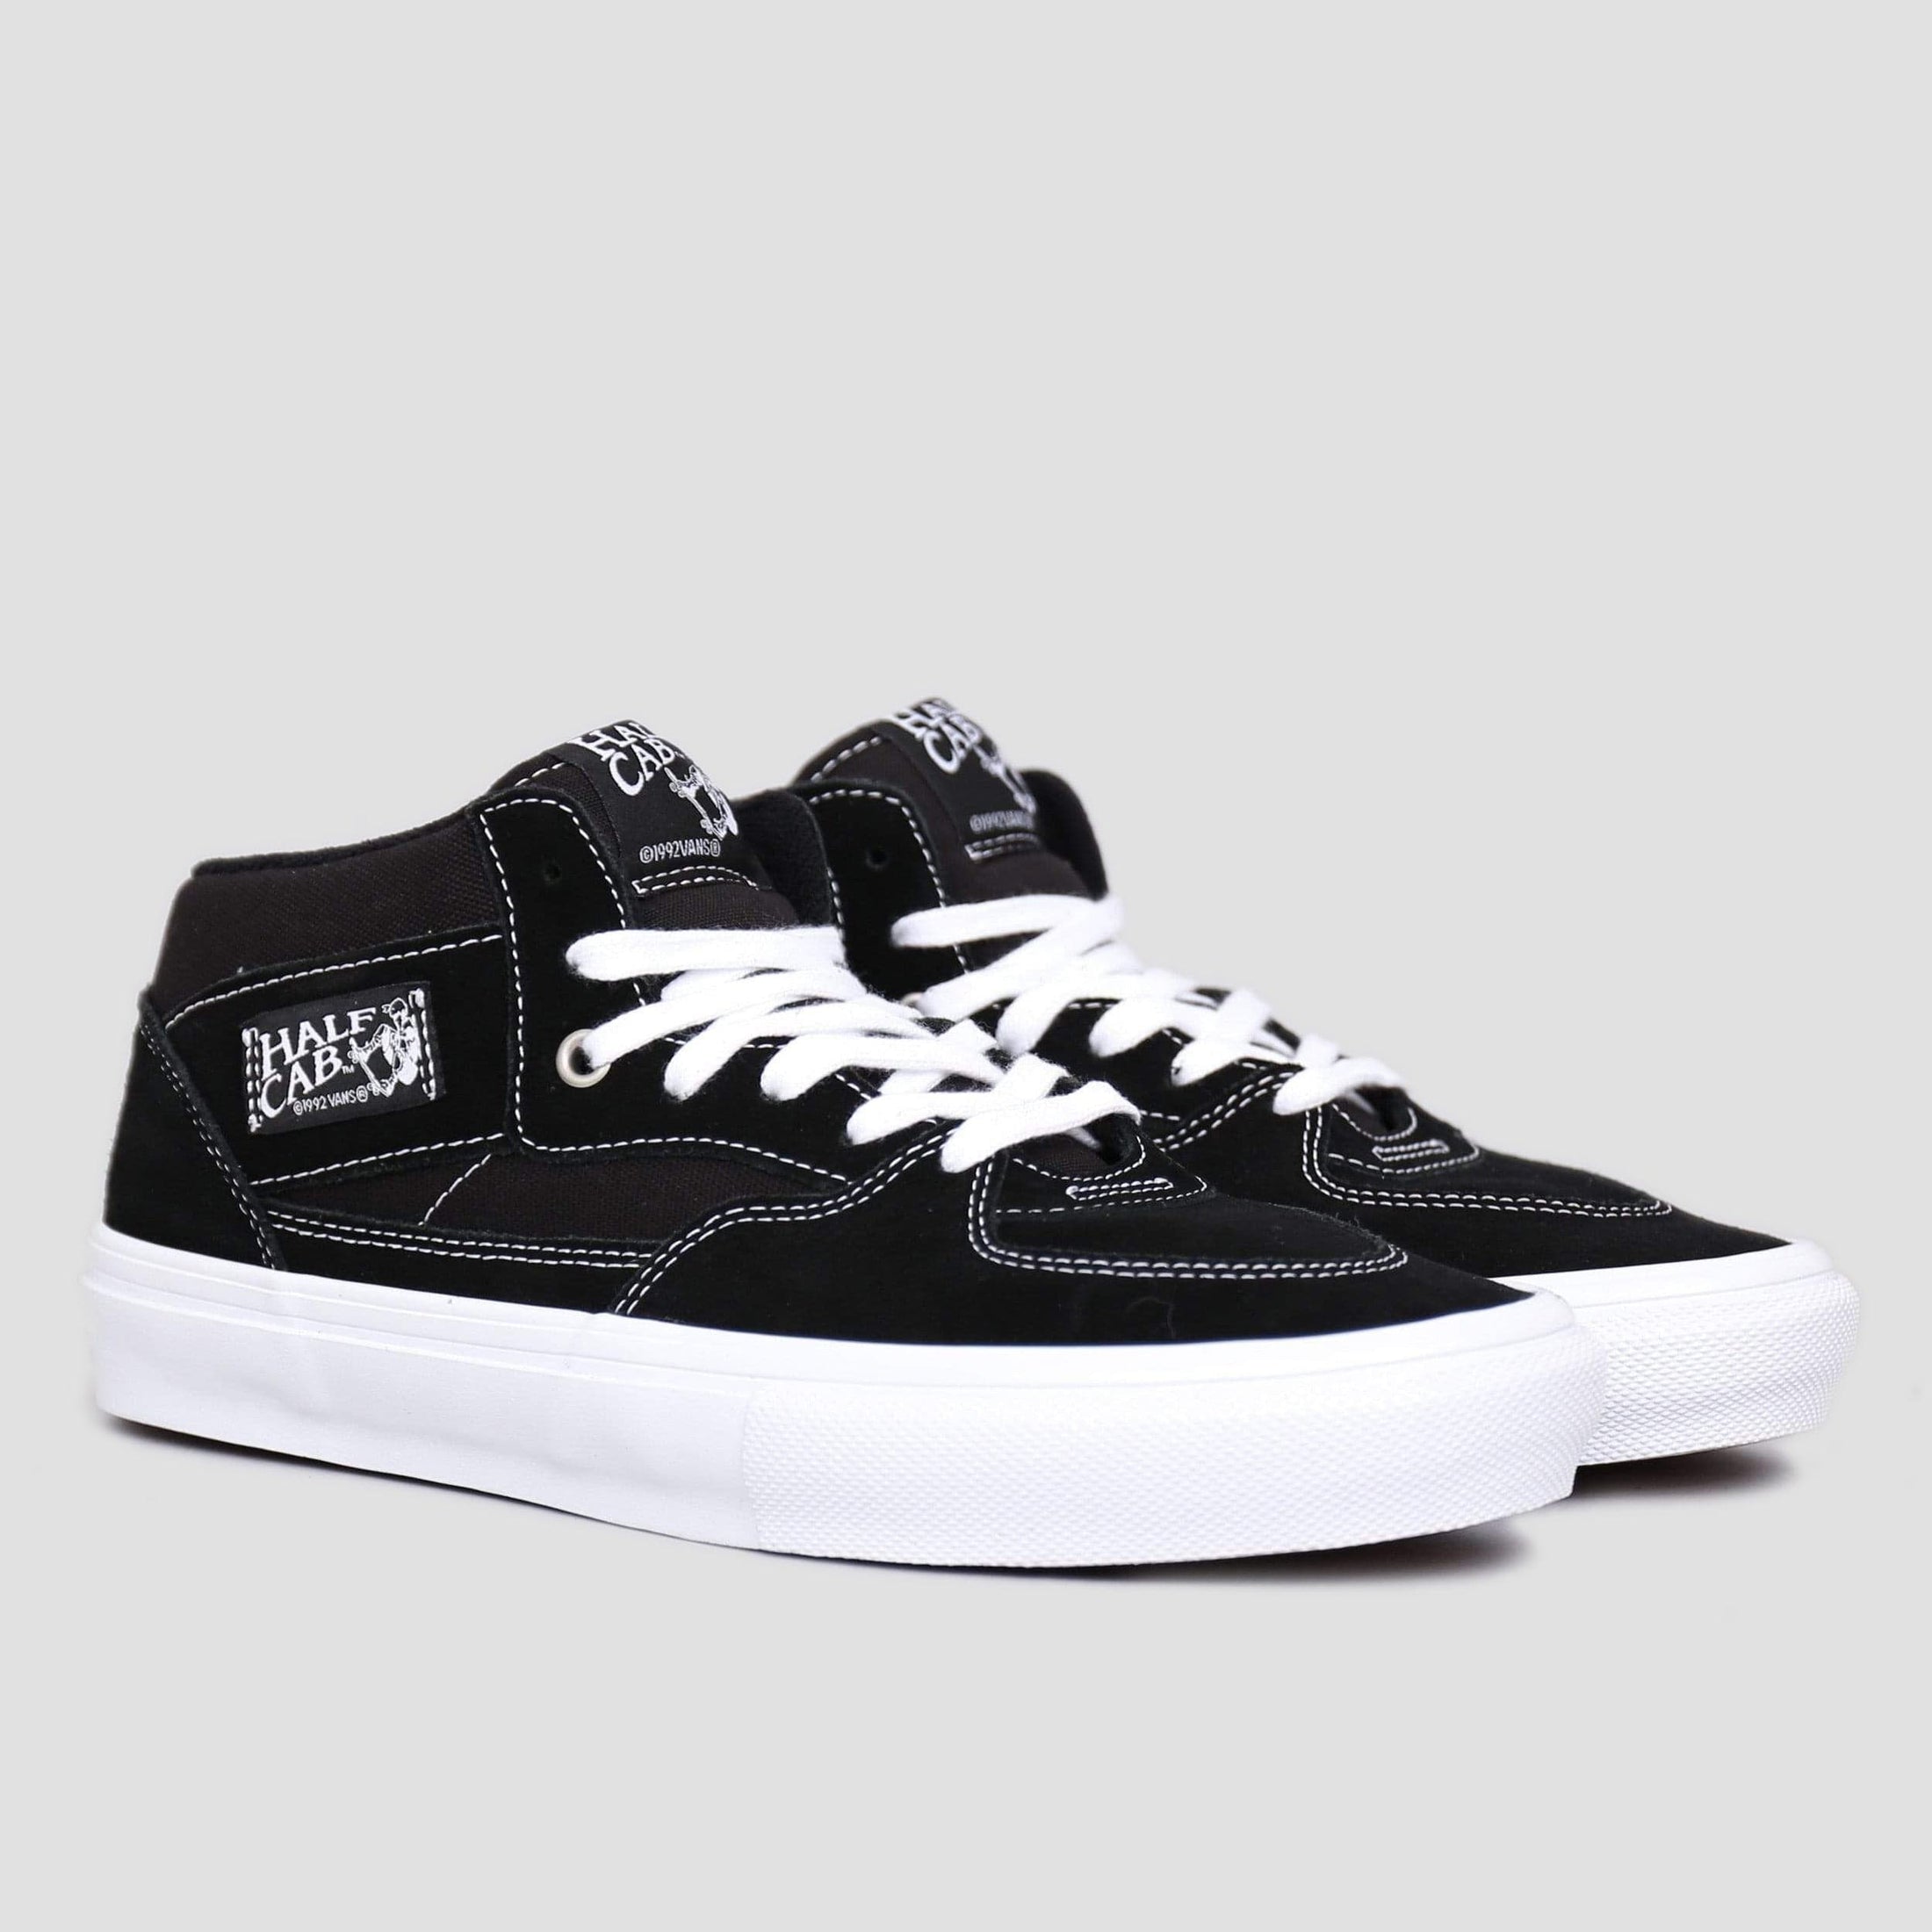 Vans Skate Half Cab Shoes Black / White